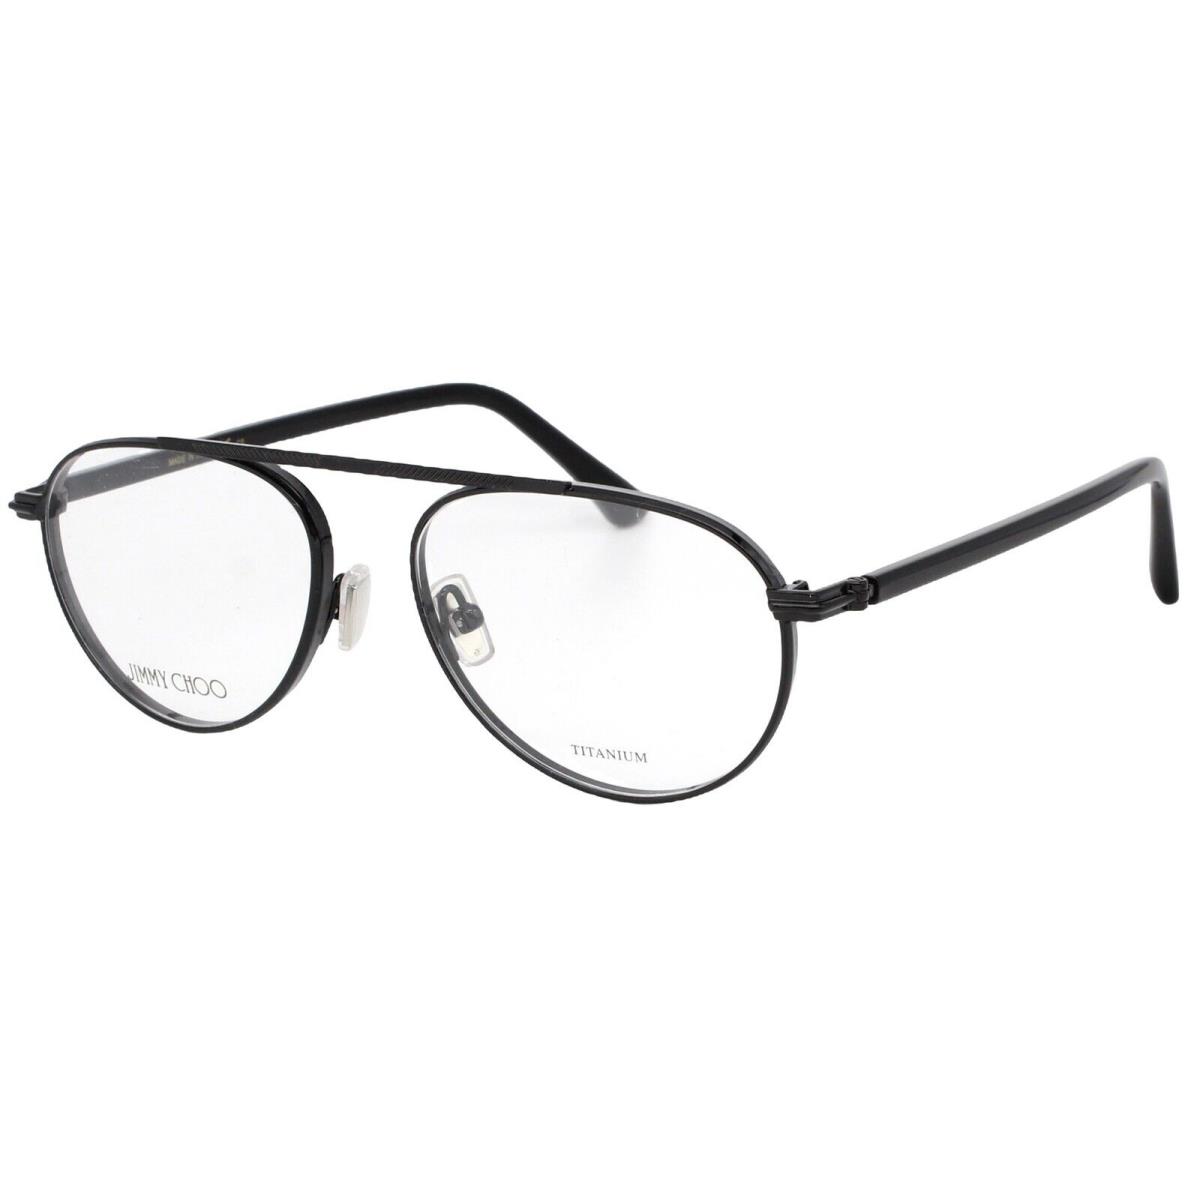 Jimmy Choo JM 003 807 Black Women s Titanium Eyeglasses 55-17-150 W/case